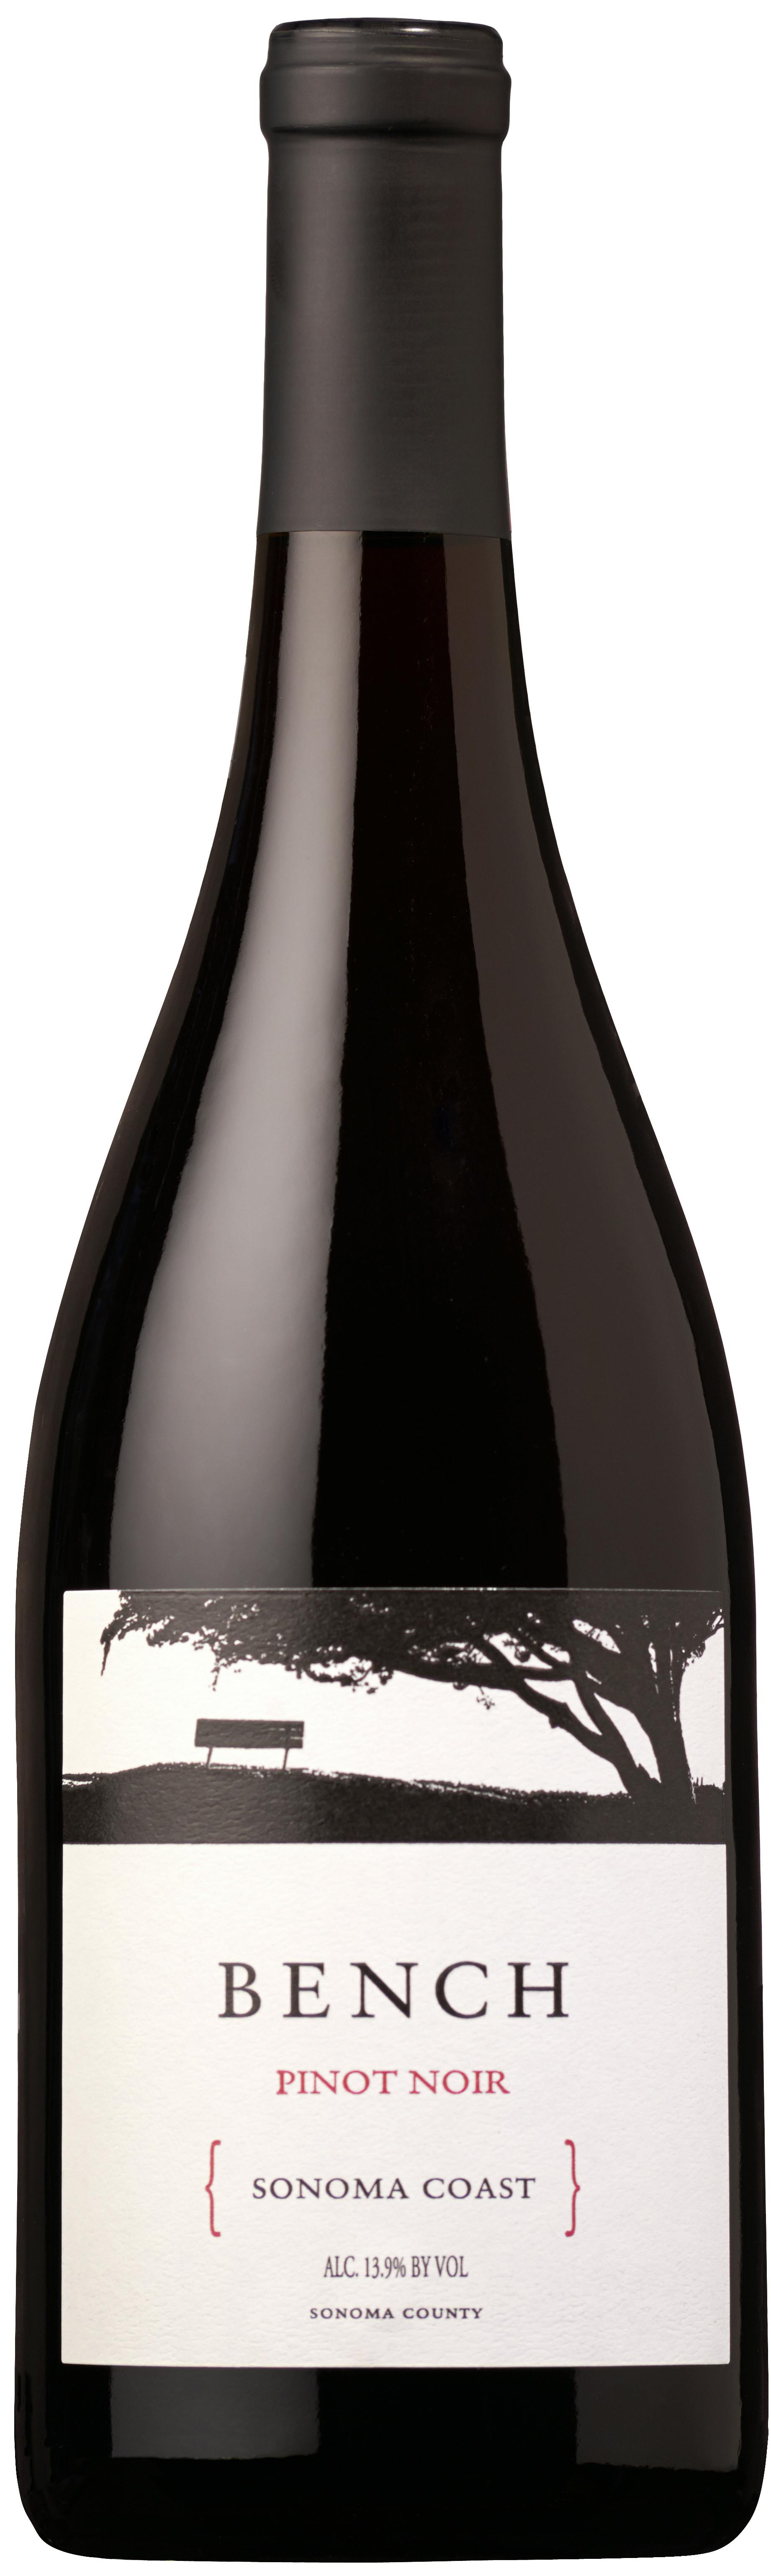 Bench Pinot Noir 2018 Argonaut Wine Liquor